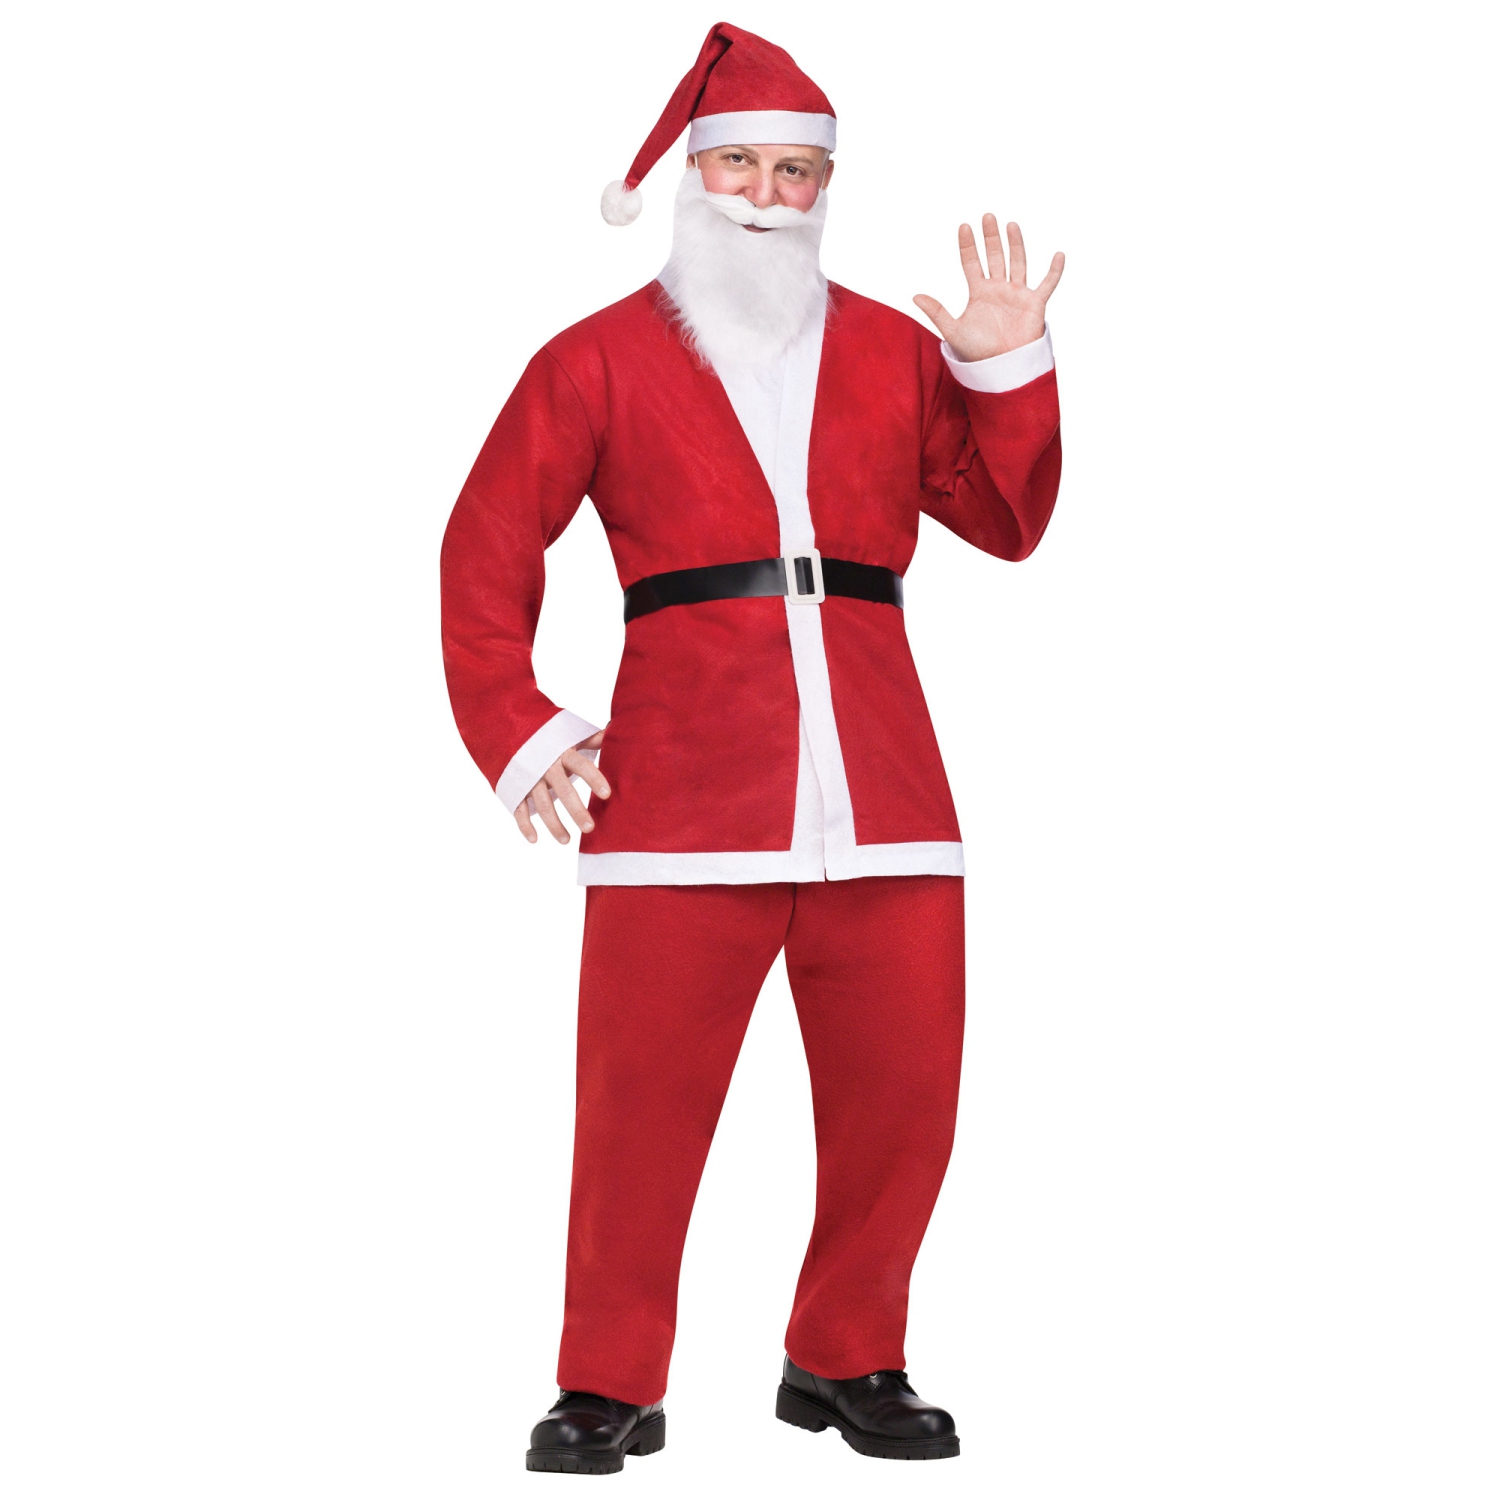 Pub Crawl Adult Santa Suit Christmas Costume - Standard Size